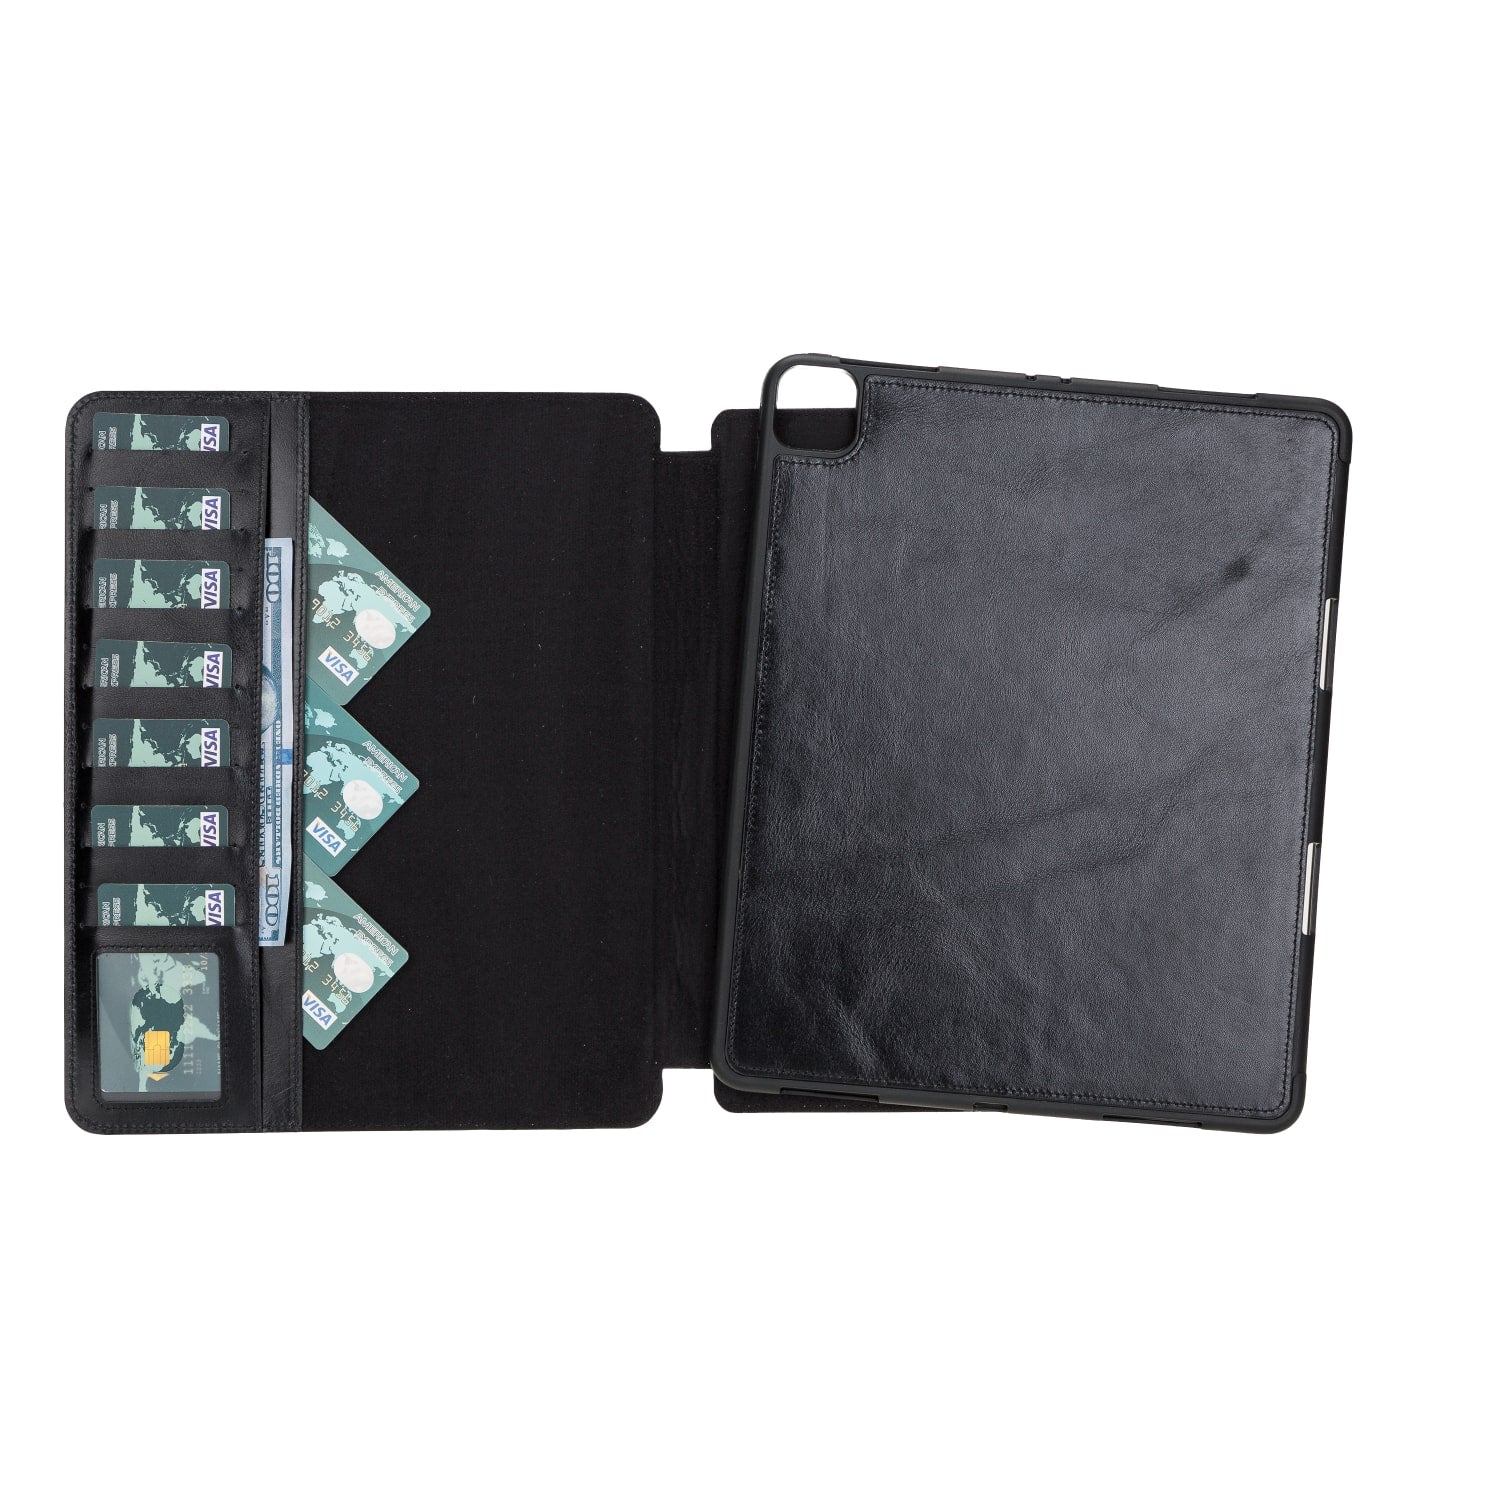 Black Leather iPad Pro 12.9 Inc Smart Folio Case with Apple Pen Holder - Bomonti - 1